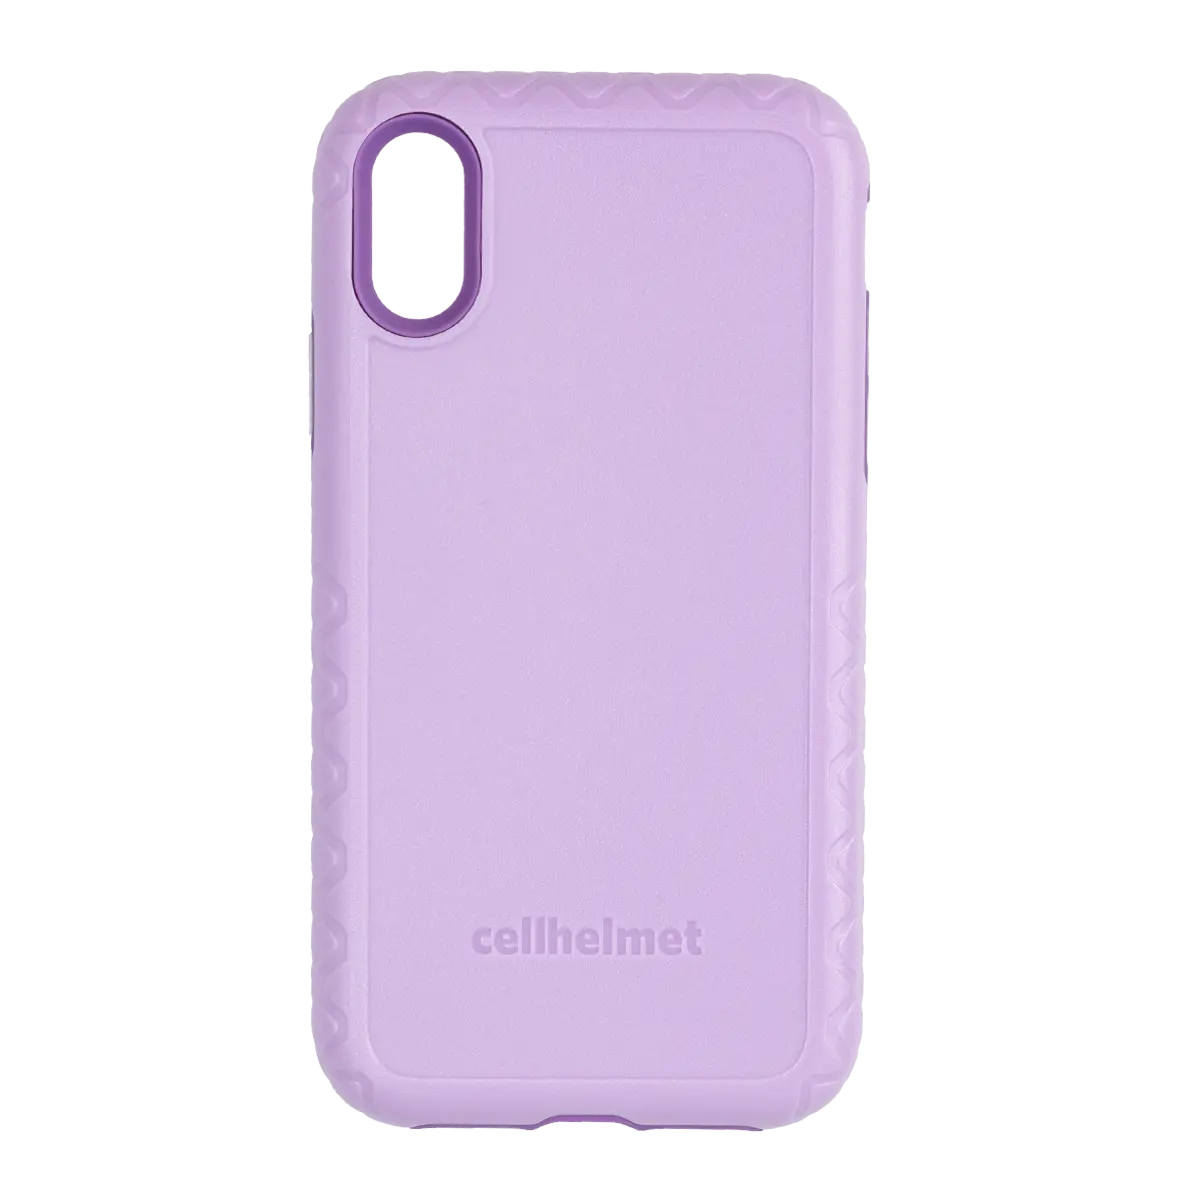 Purple cellhelmet Customizable Case for iPhone XS